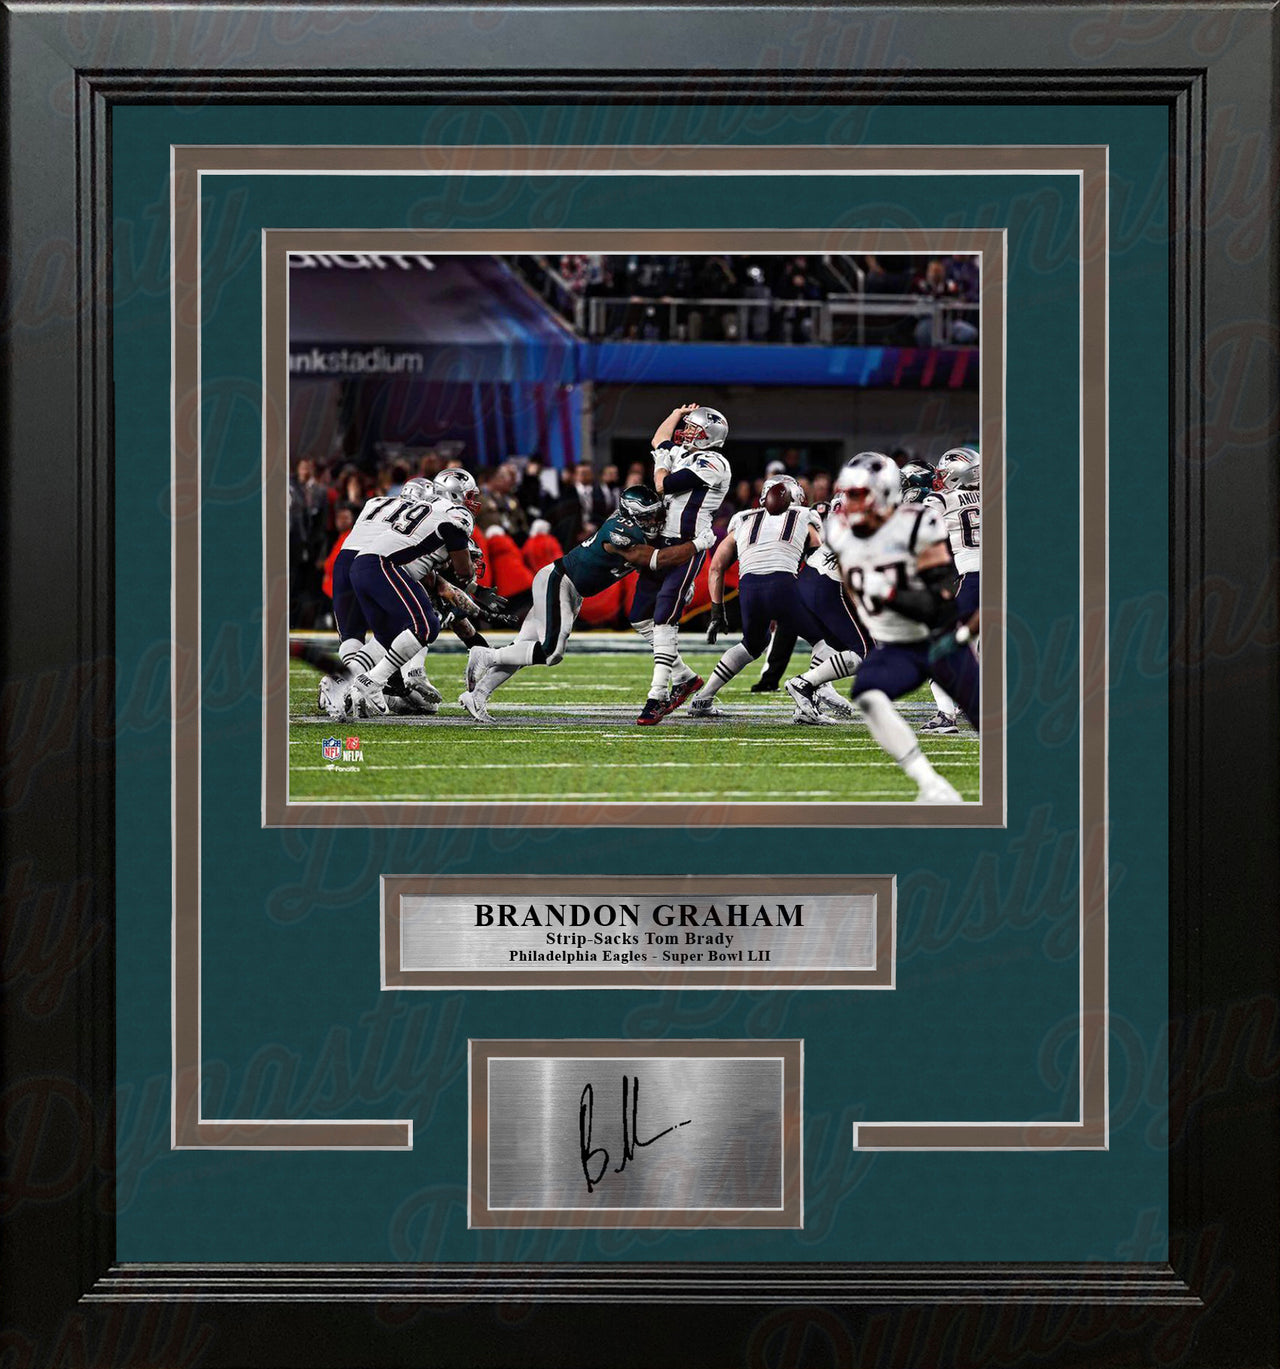 Brandon Graham Sacks Brady Super Bowl Philadelphia Eagles Framed Photo with Engraved Autograph - Dynasty Sports & Framing 